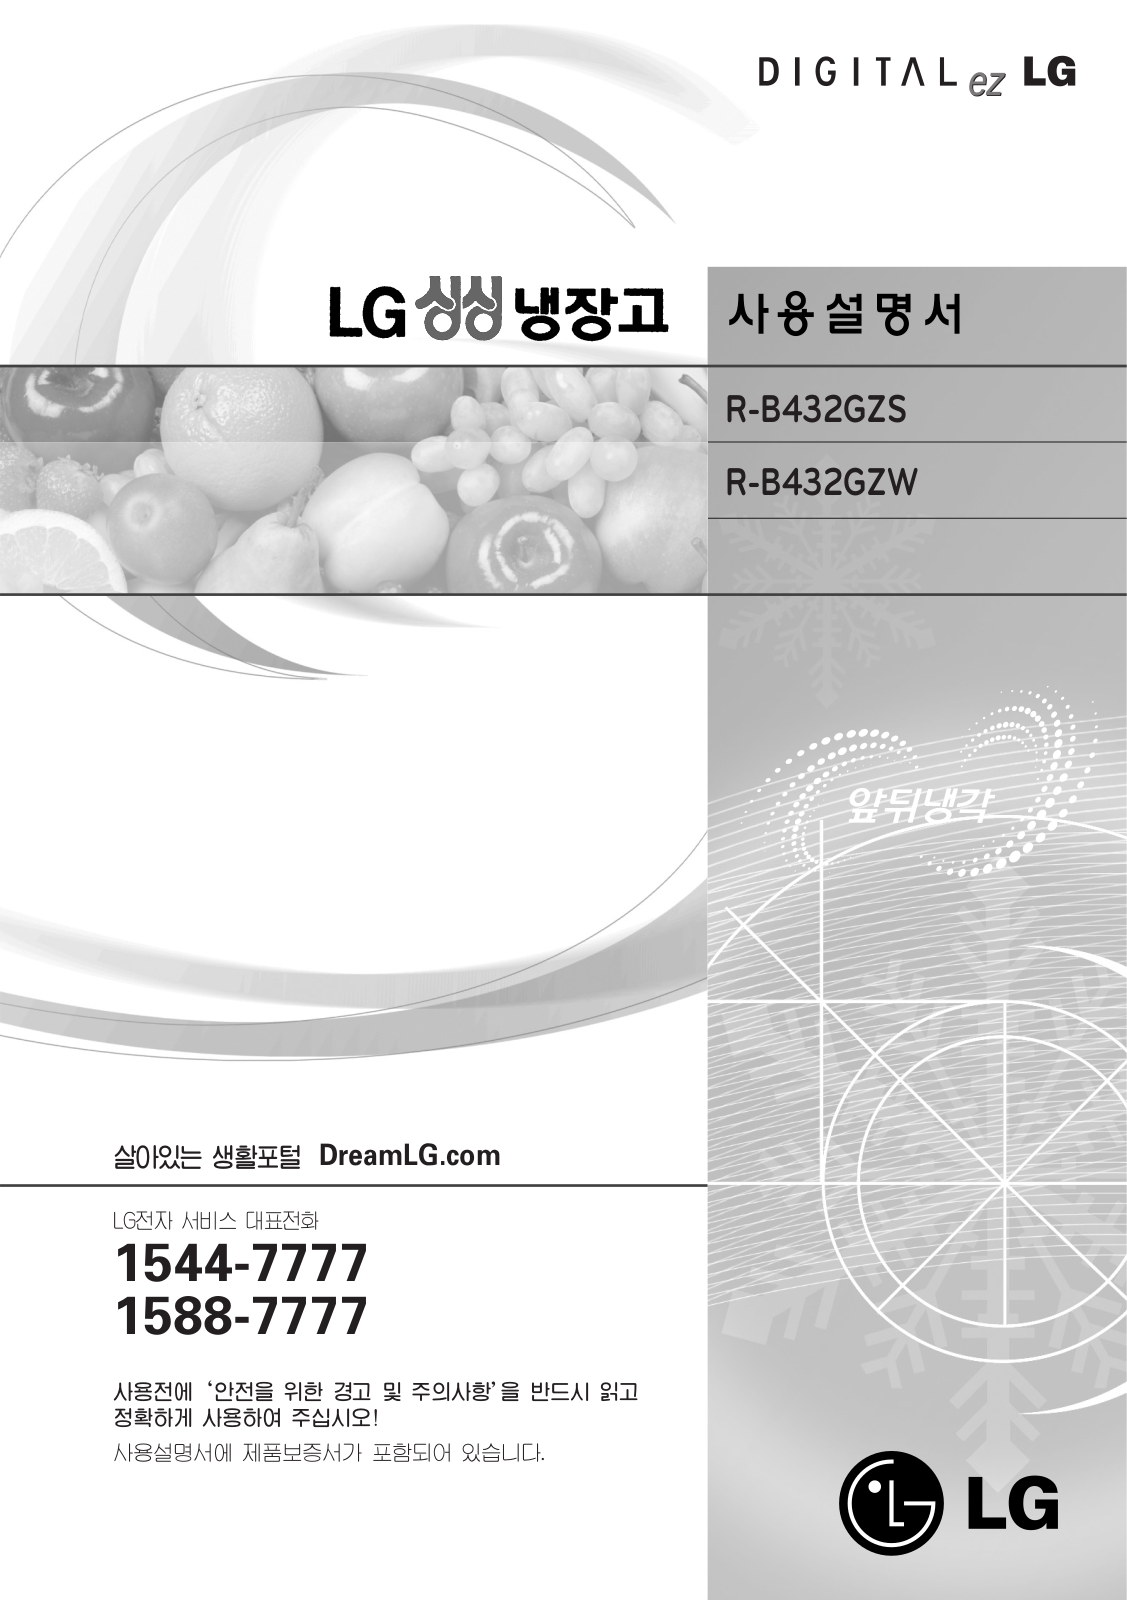 LG R-B432GZW Manual book